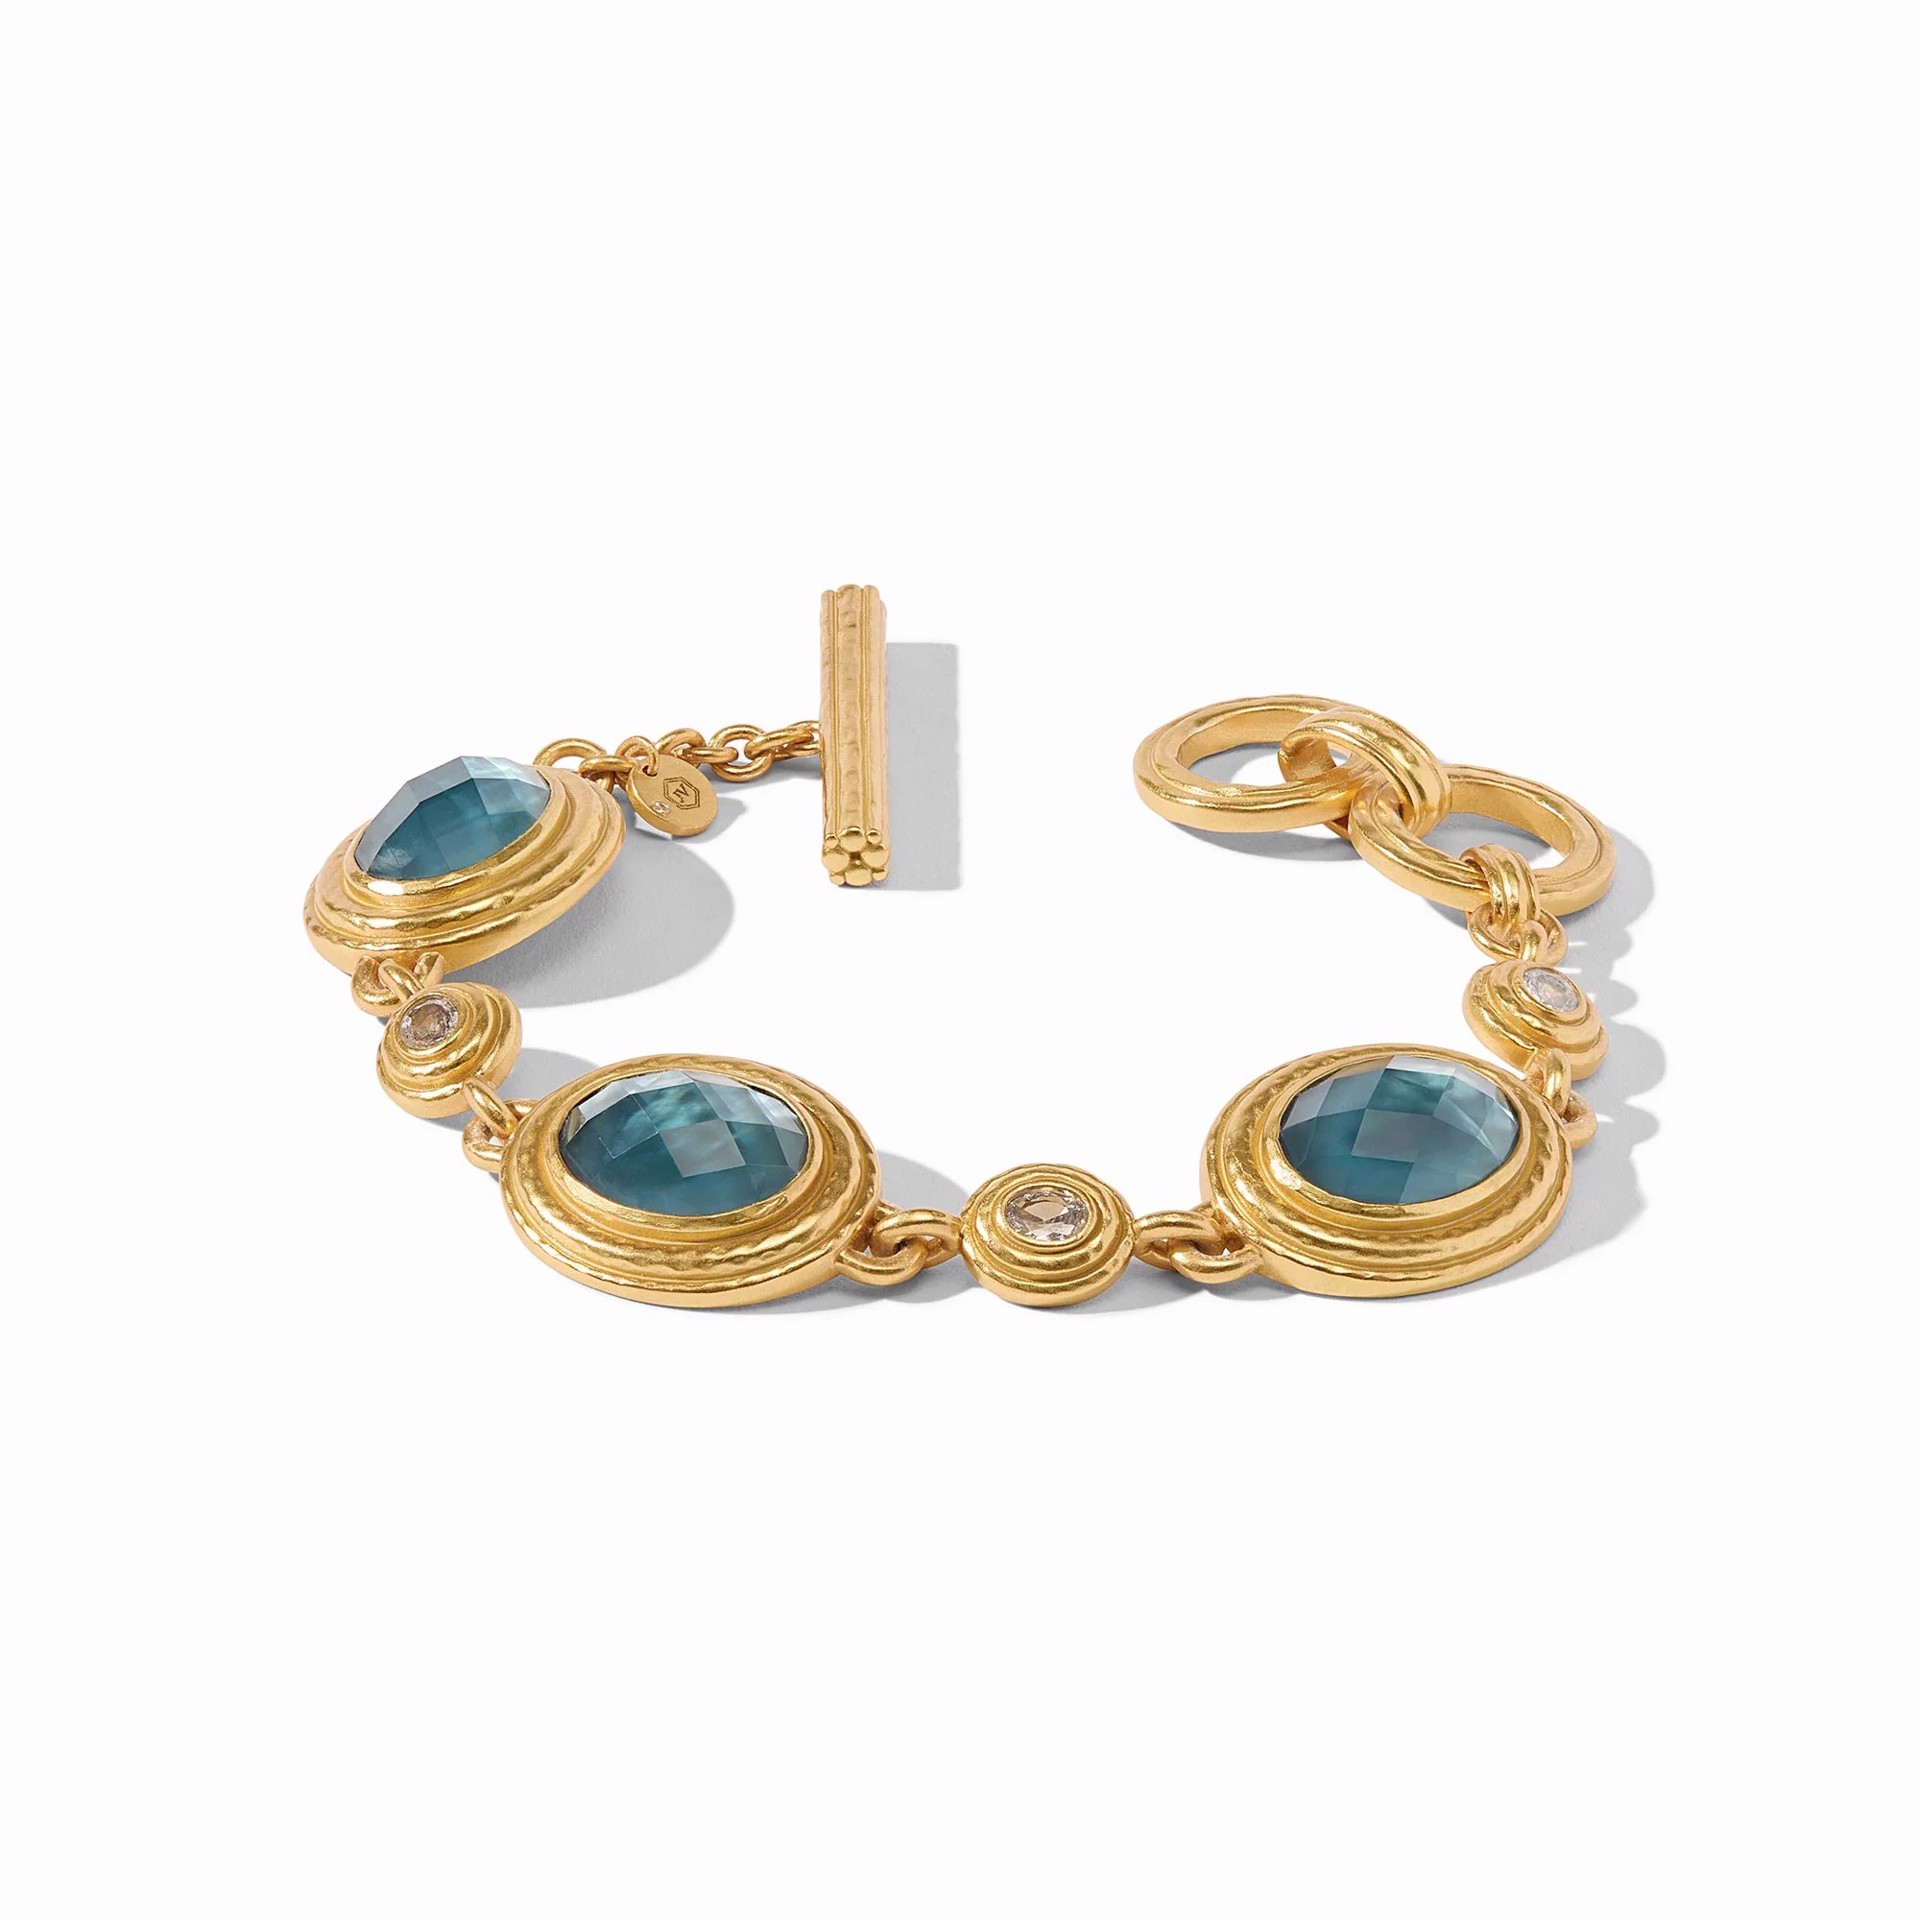 Tudor Stone Bracelet - Peacock Blue by Julie Vos